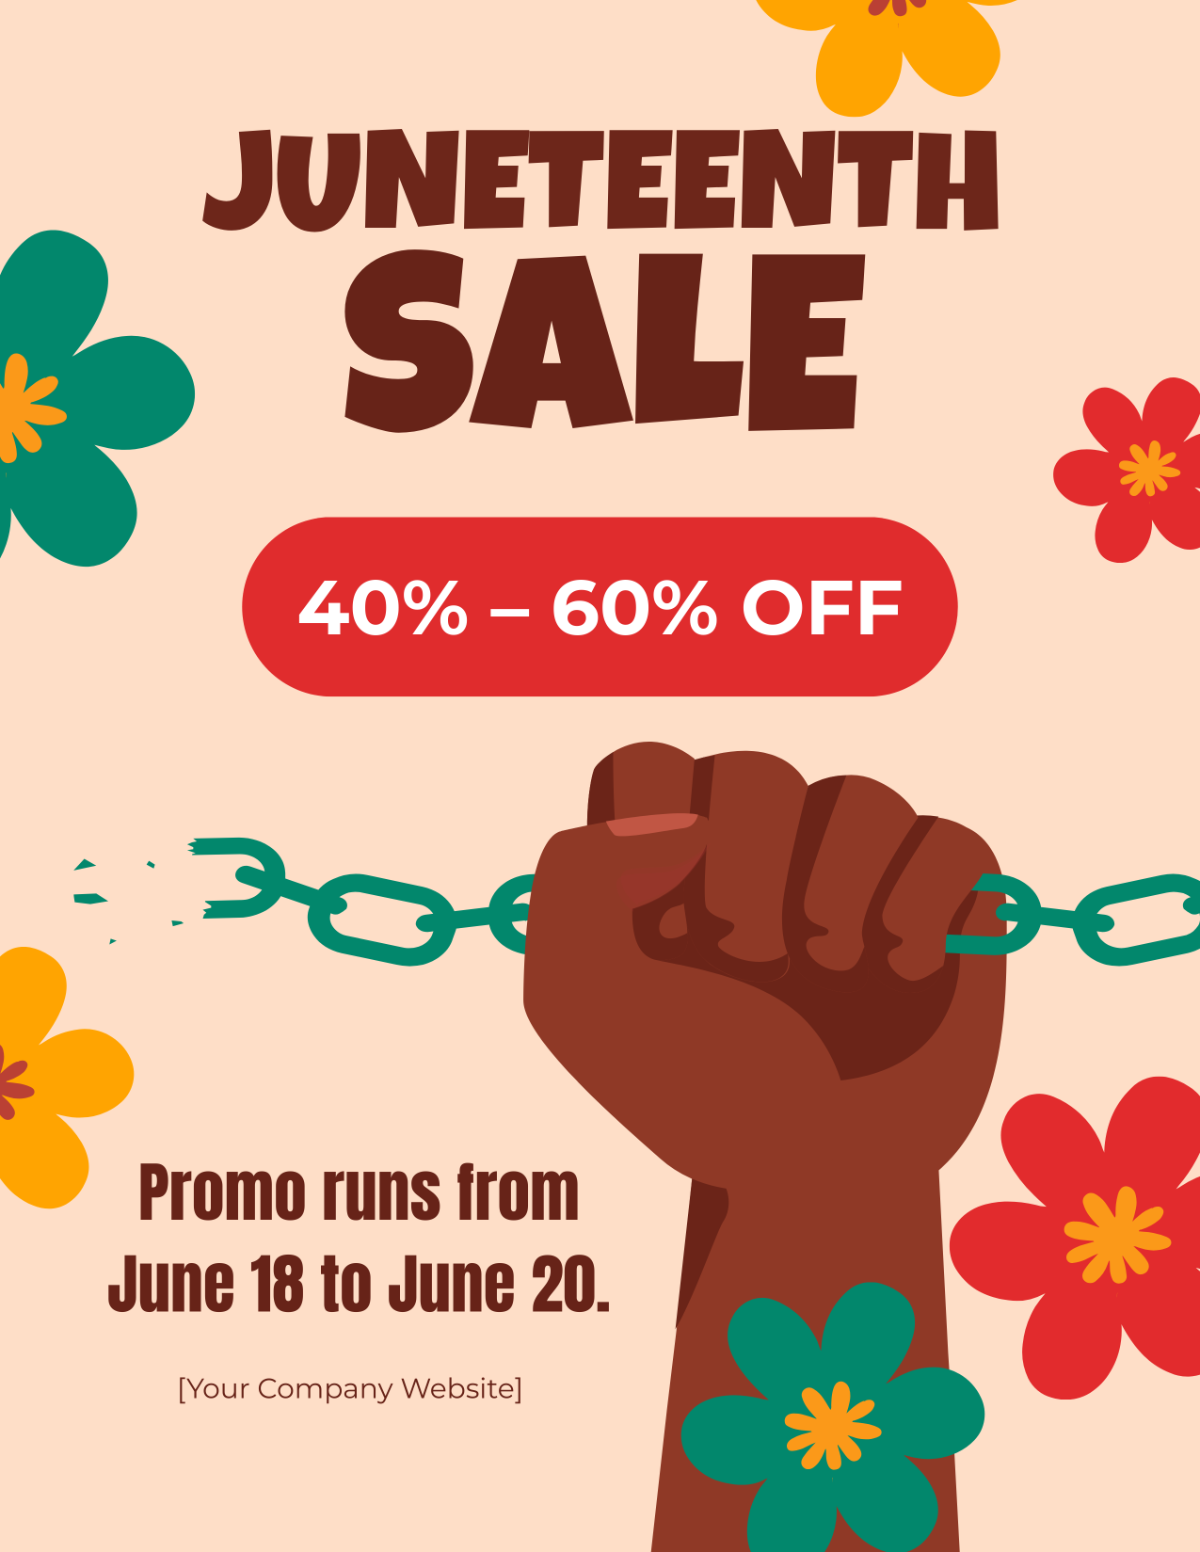 Juneteenth Sale Flyer